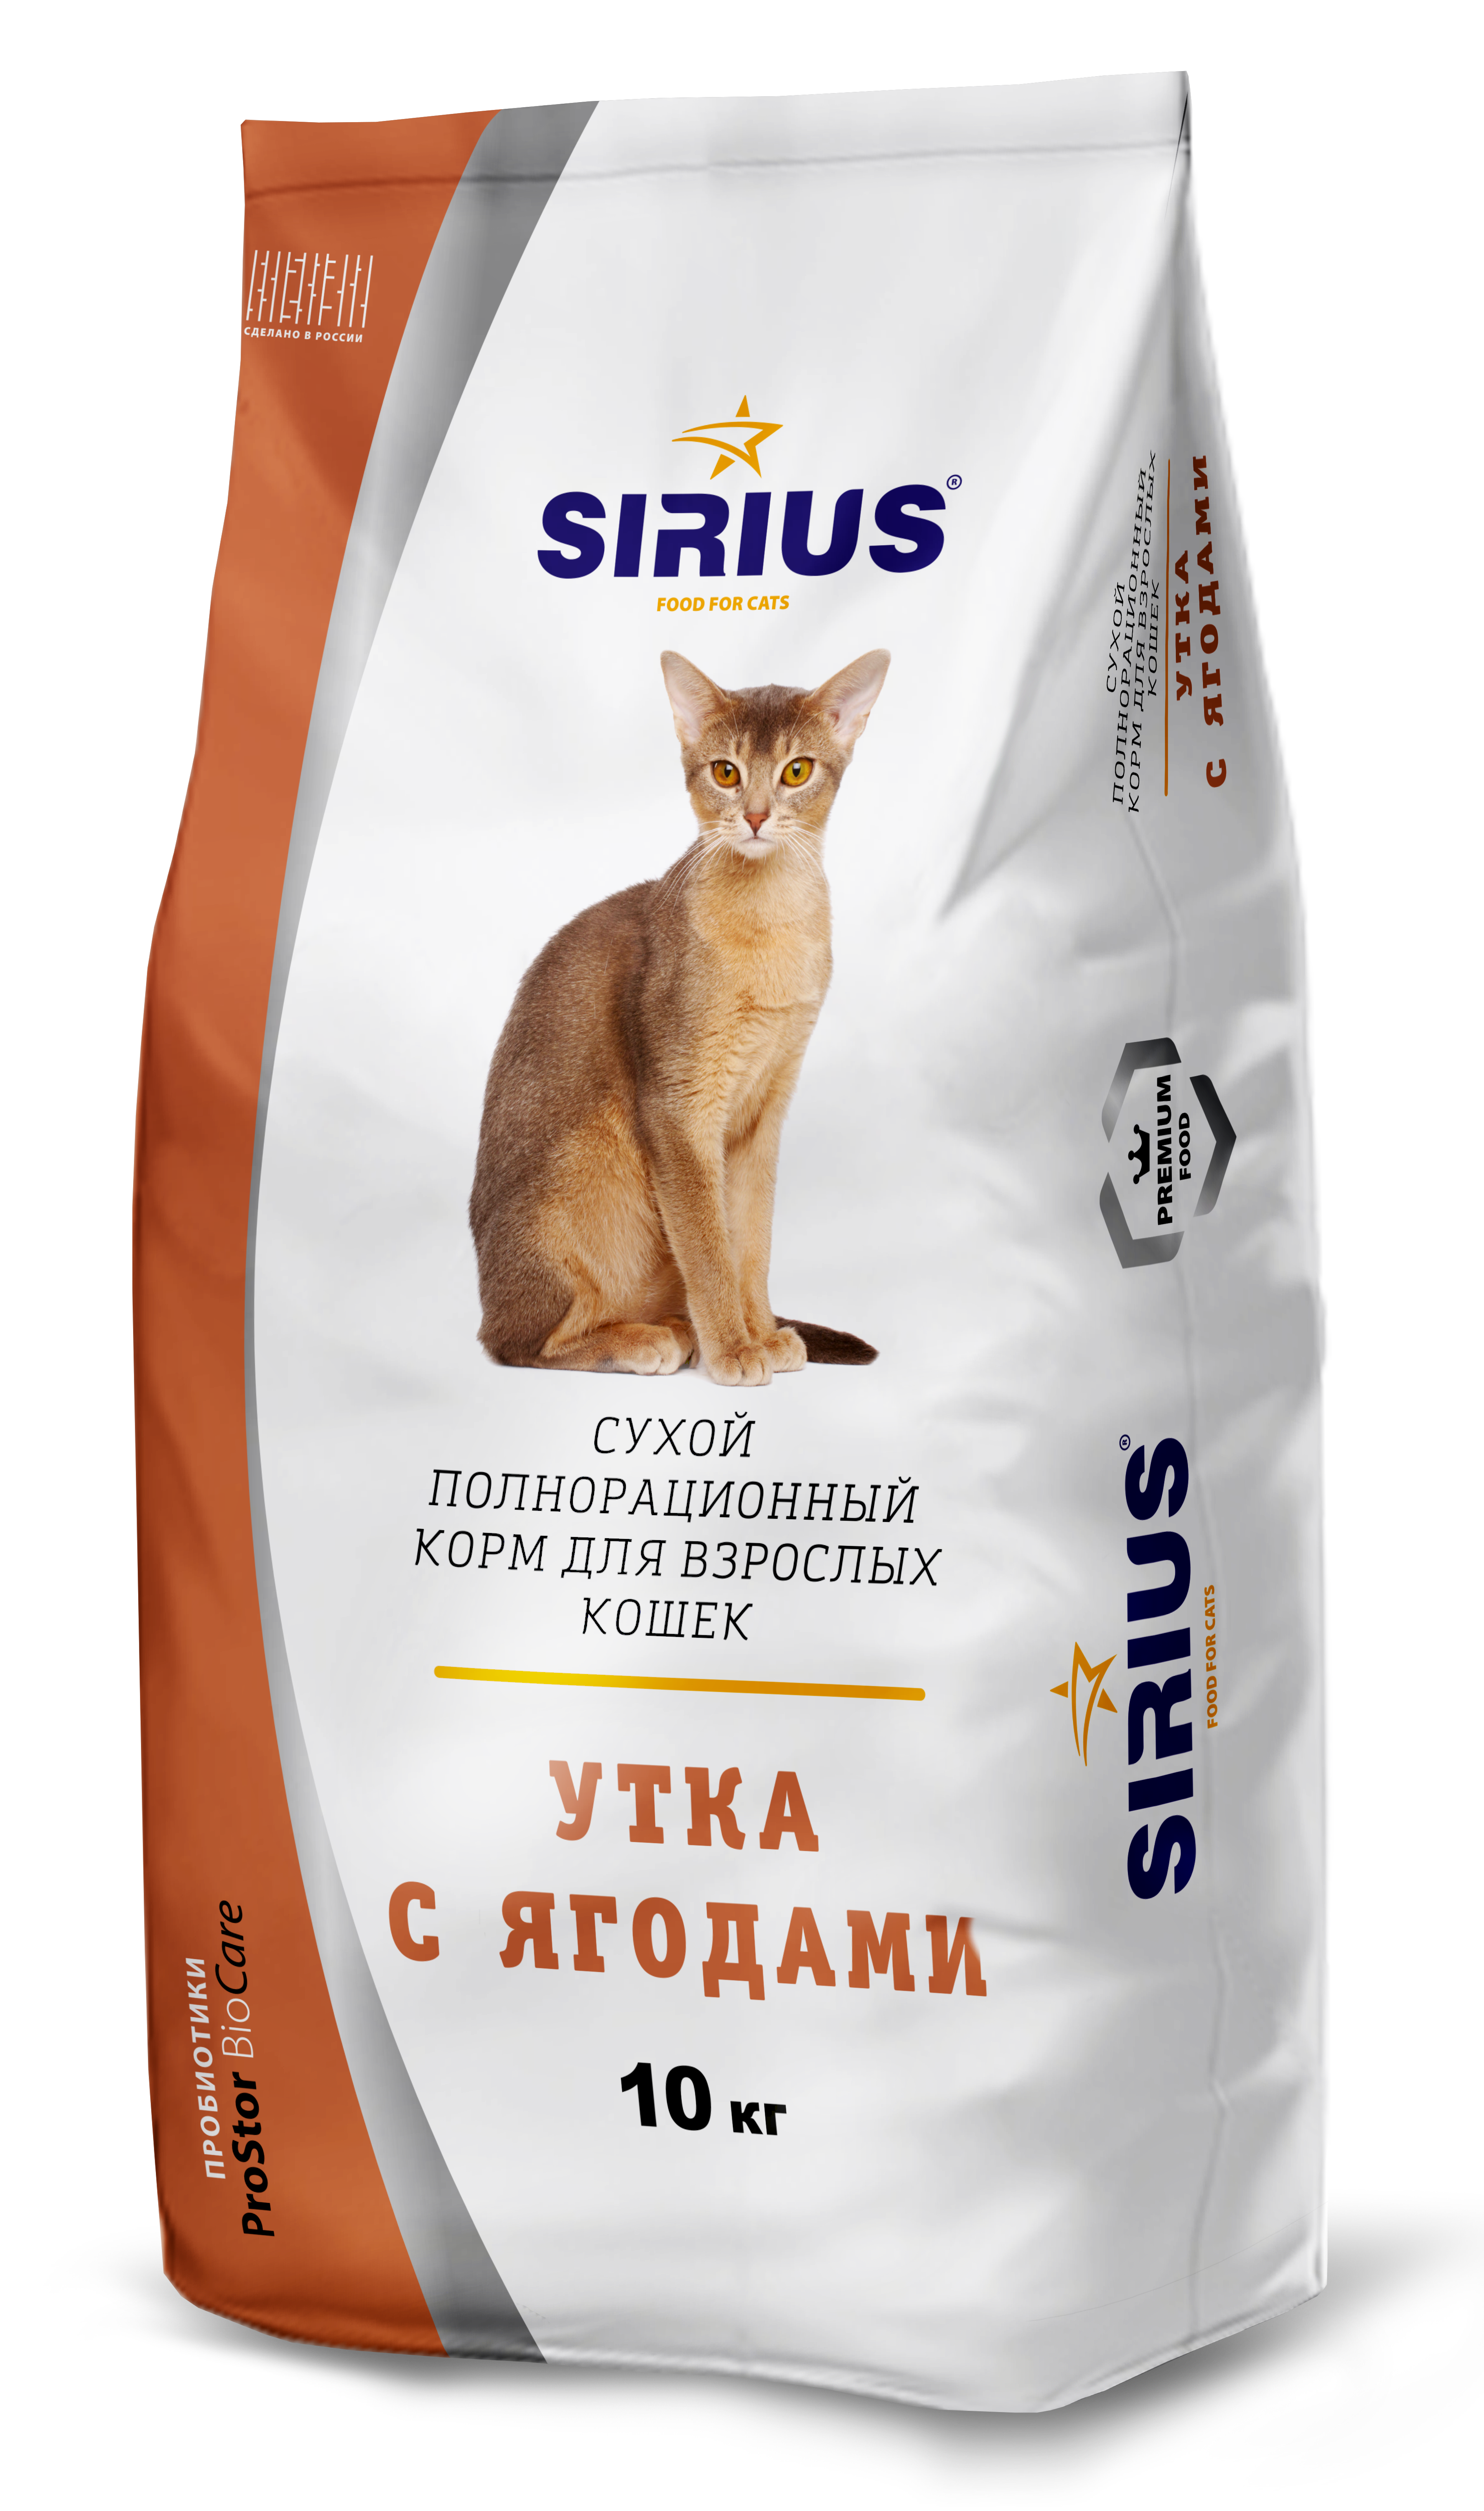 Купить корм премиум класса. Корм Сириус для кошек лосось и рис. Корм для кошек Sirius лосось и рис для взрослых кошек 10 кг. Сириус корм для кошек 10 кг. Sirius Platinum корм.